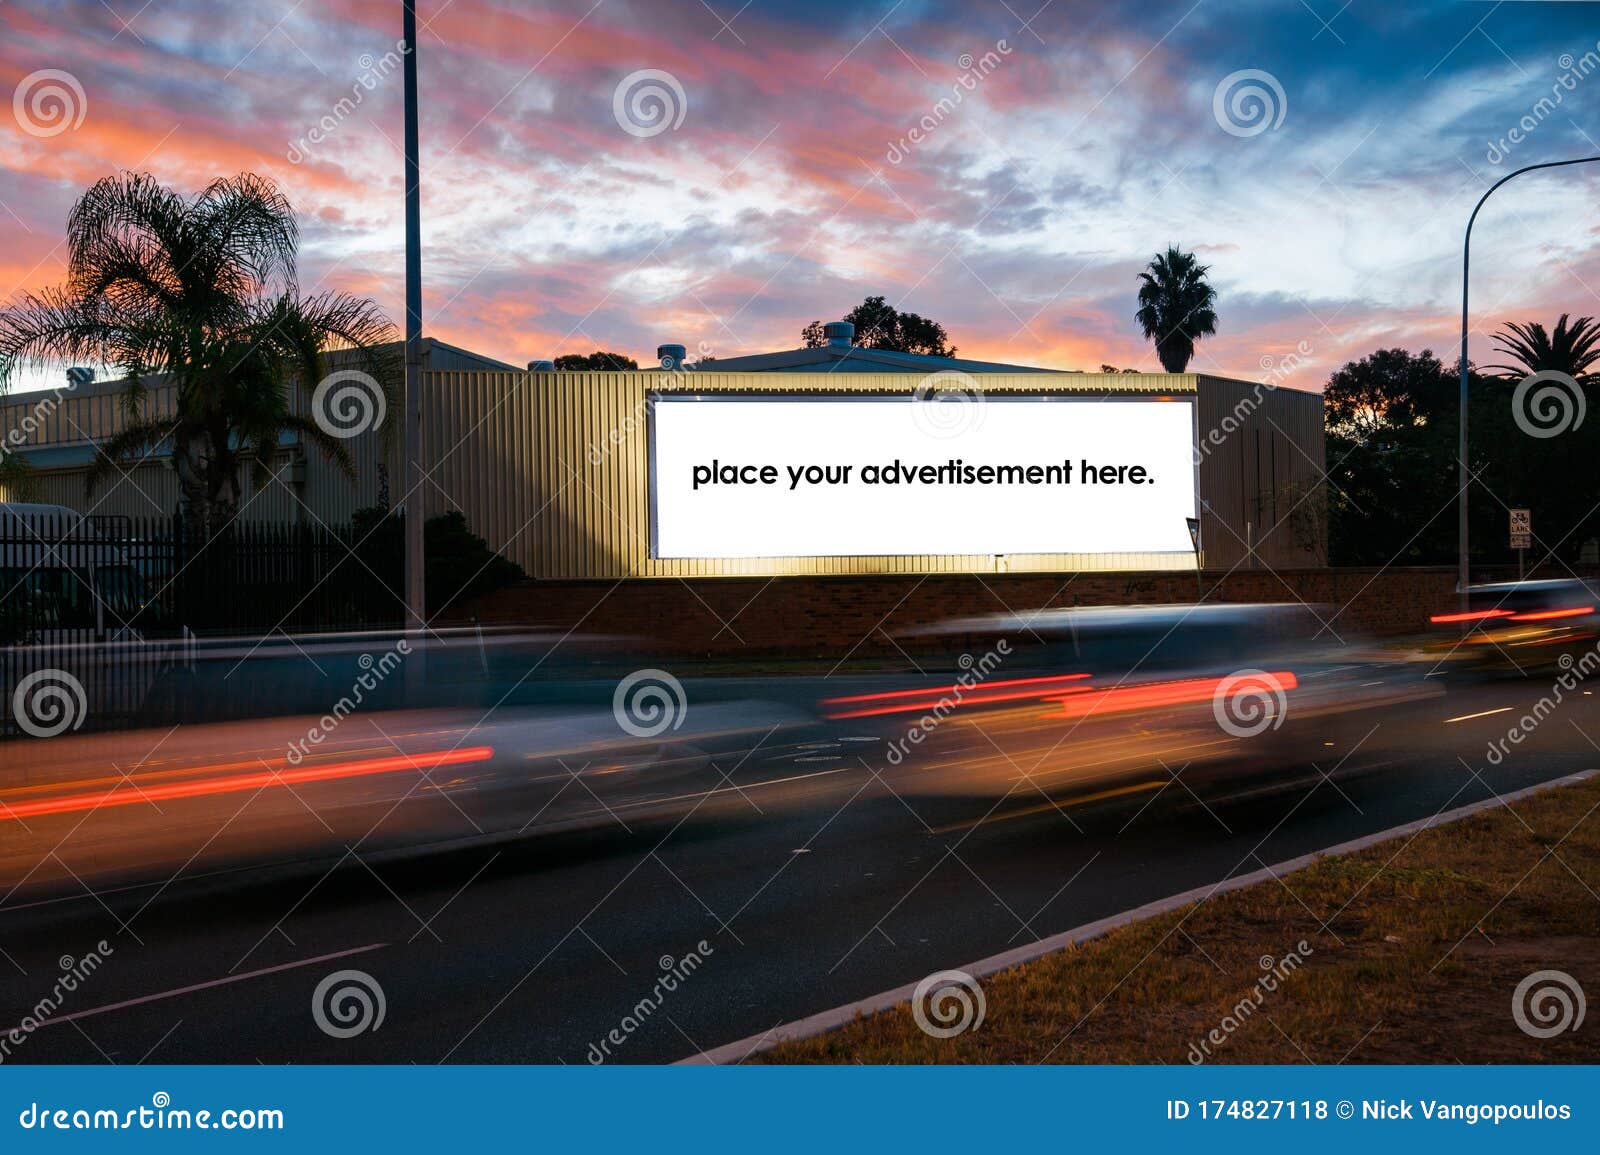 blank roadside advertising billboard at twighlight